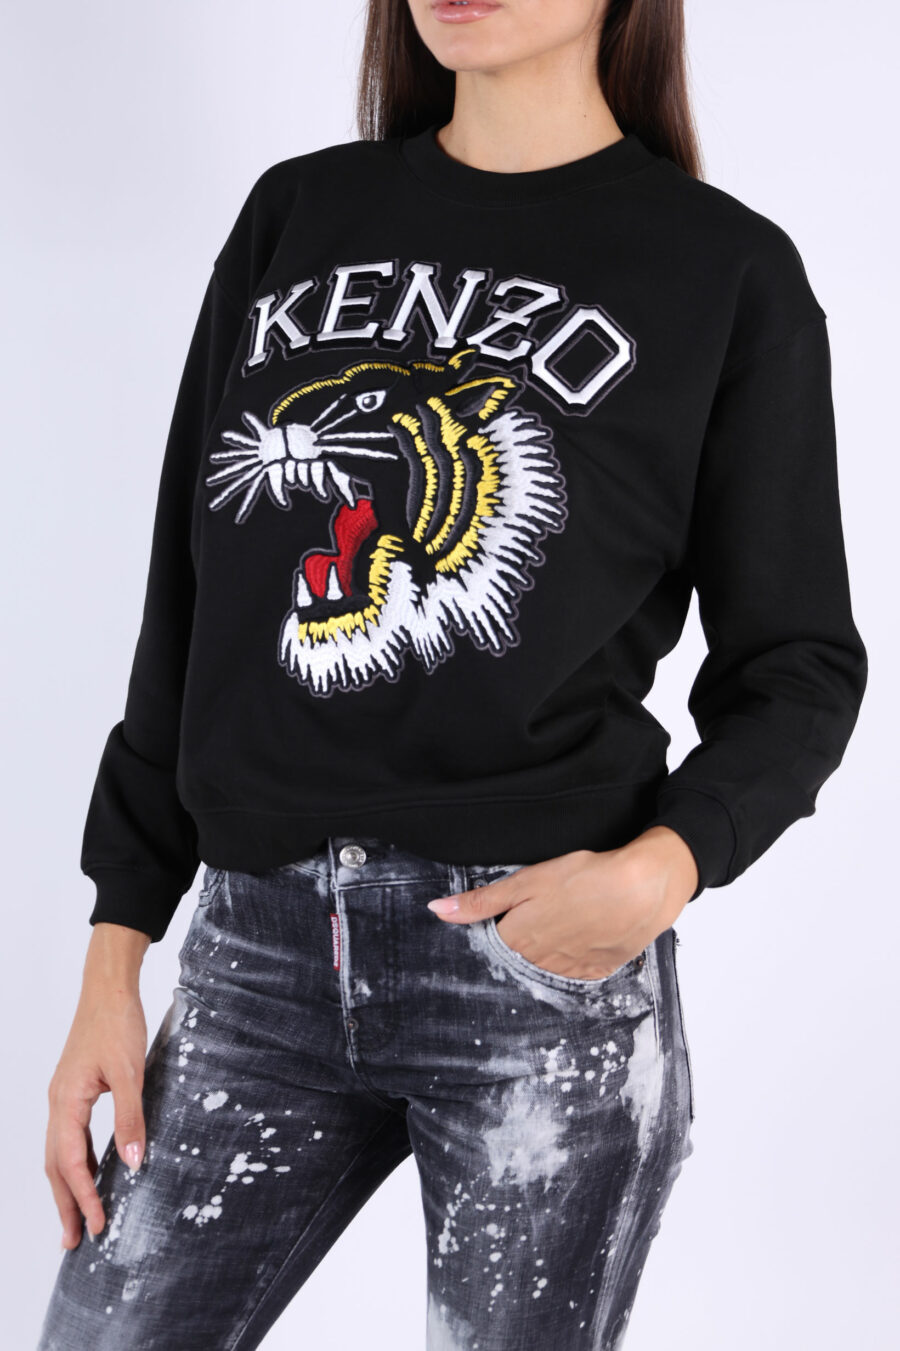 Black sweatshirt with embroidered "tiger" logo - 361223054662201660